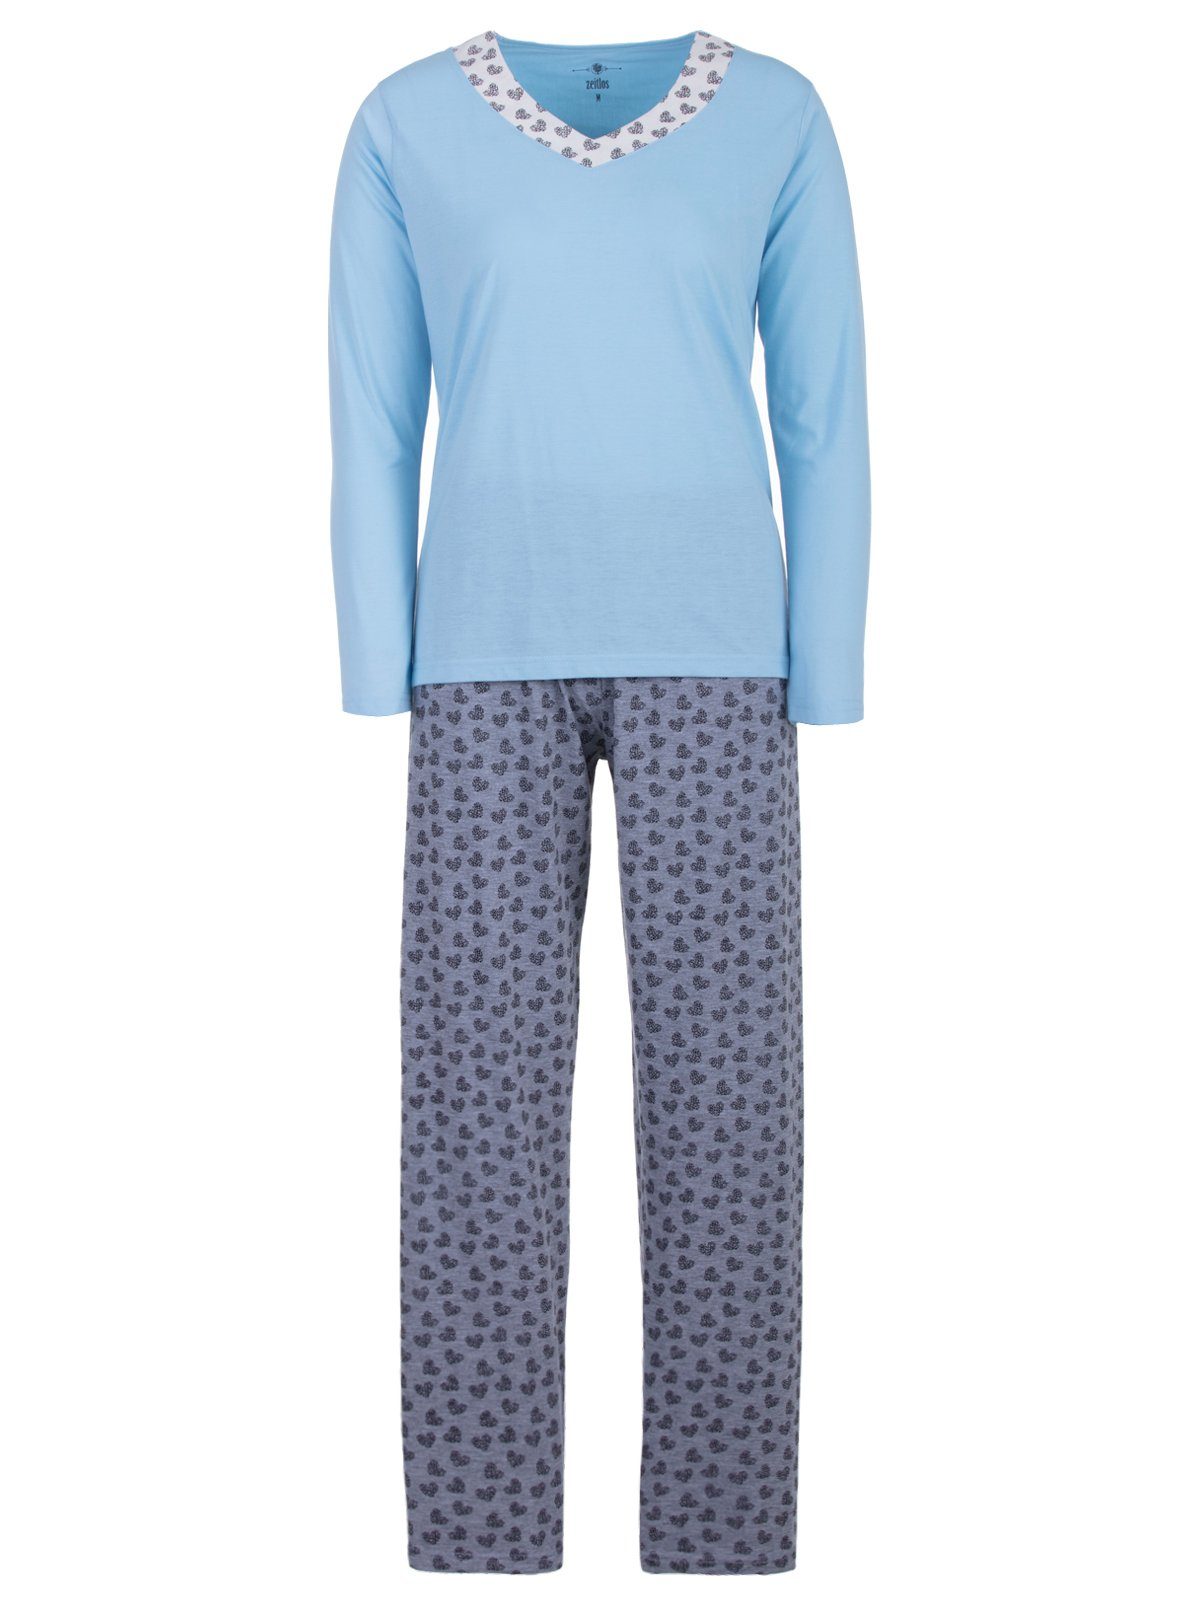 zeitlos Schlafanzug Pyjama Set Langarm - Heart blau